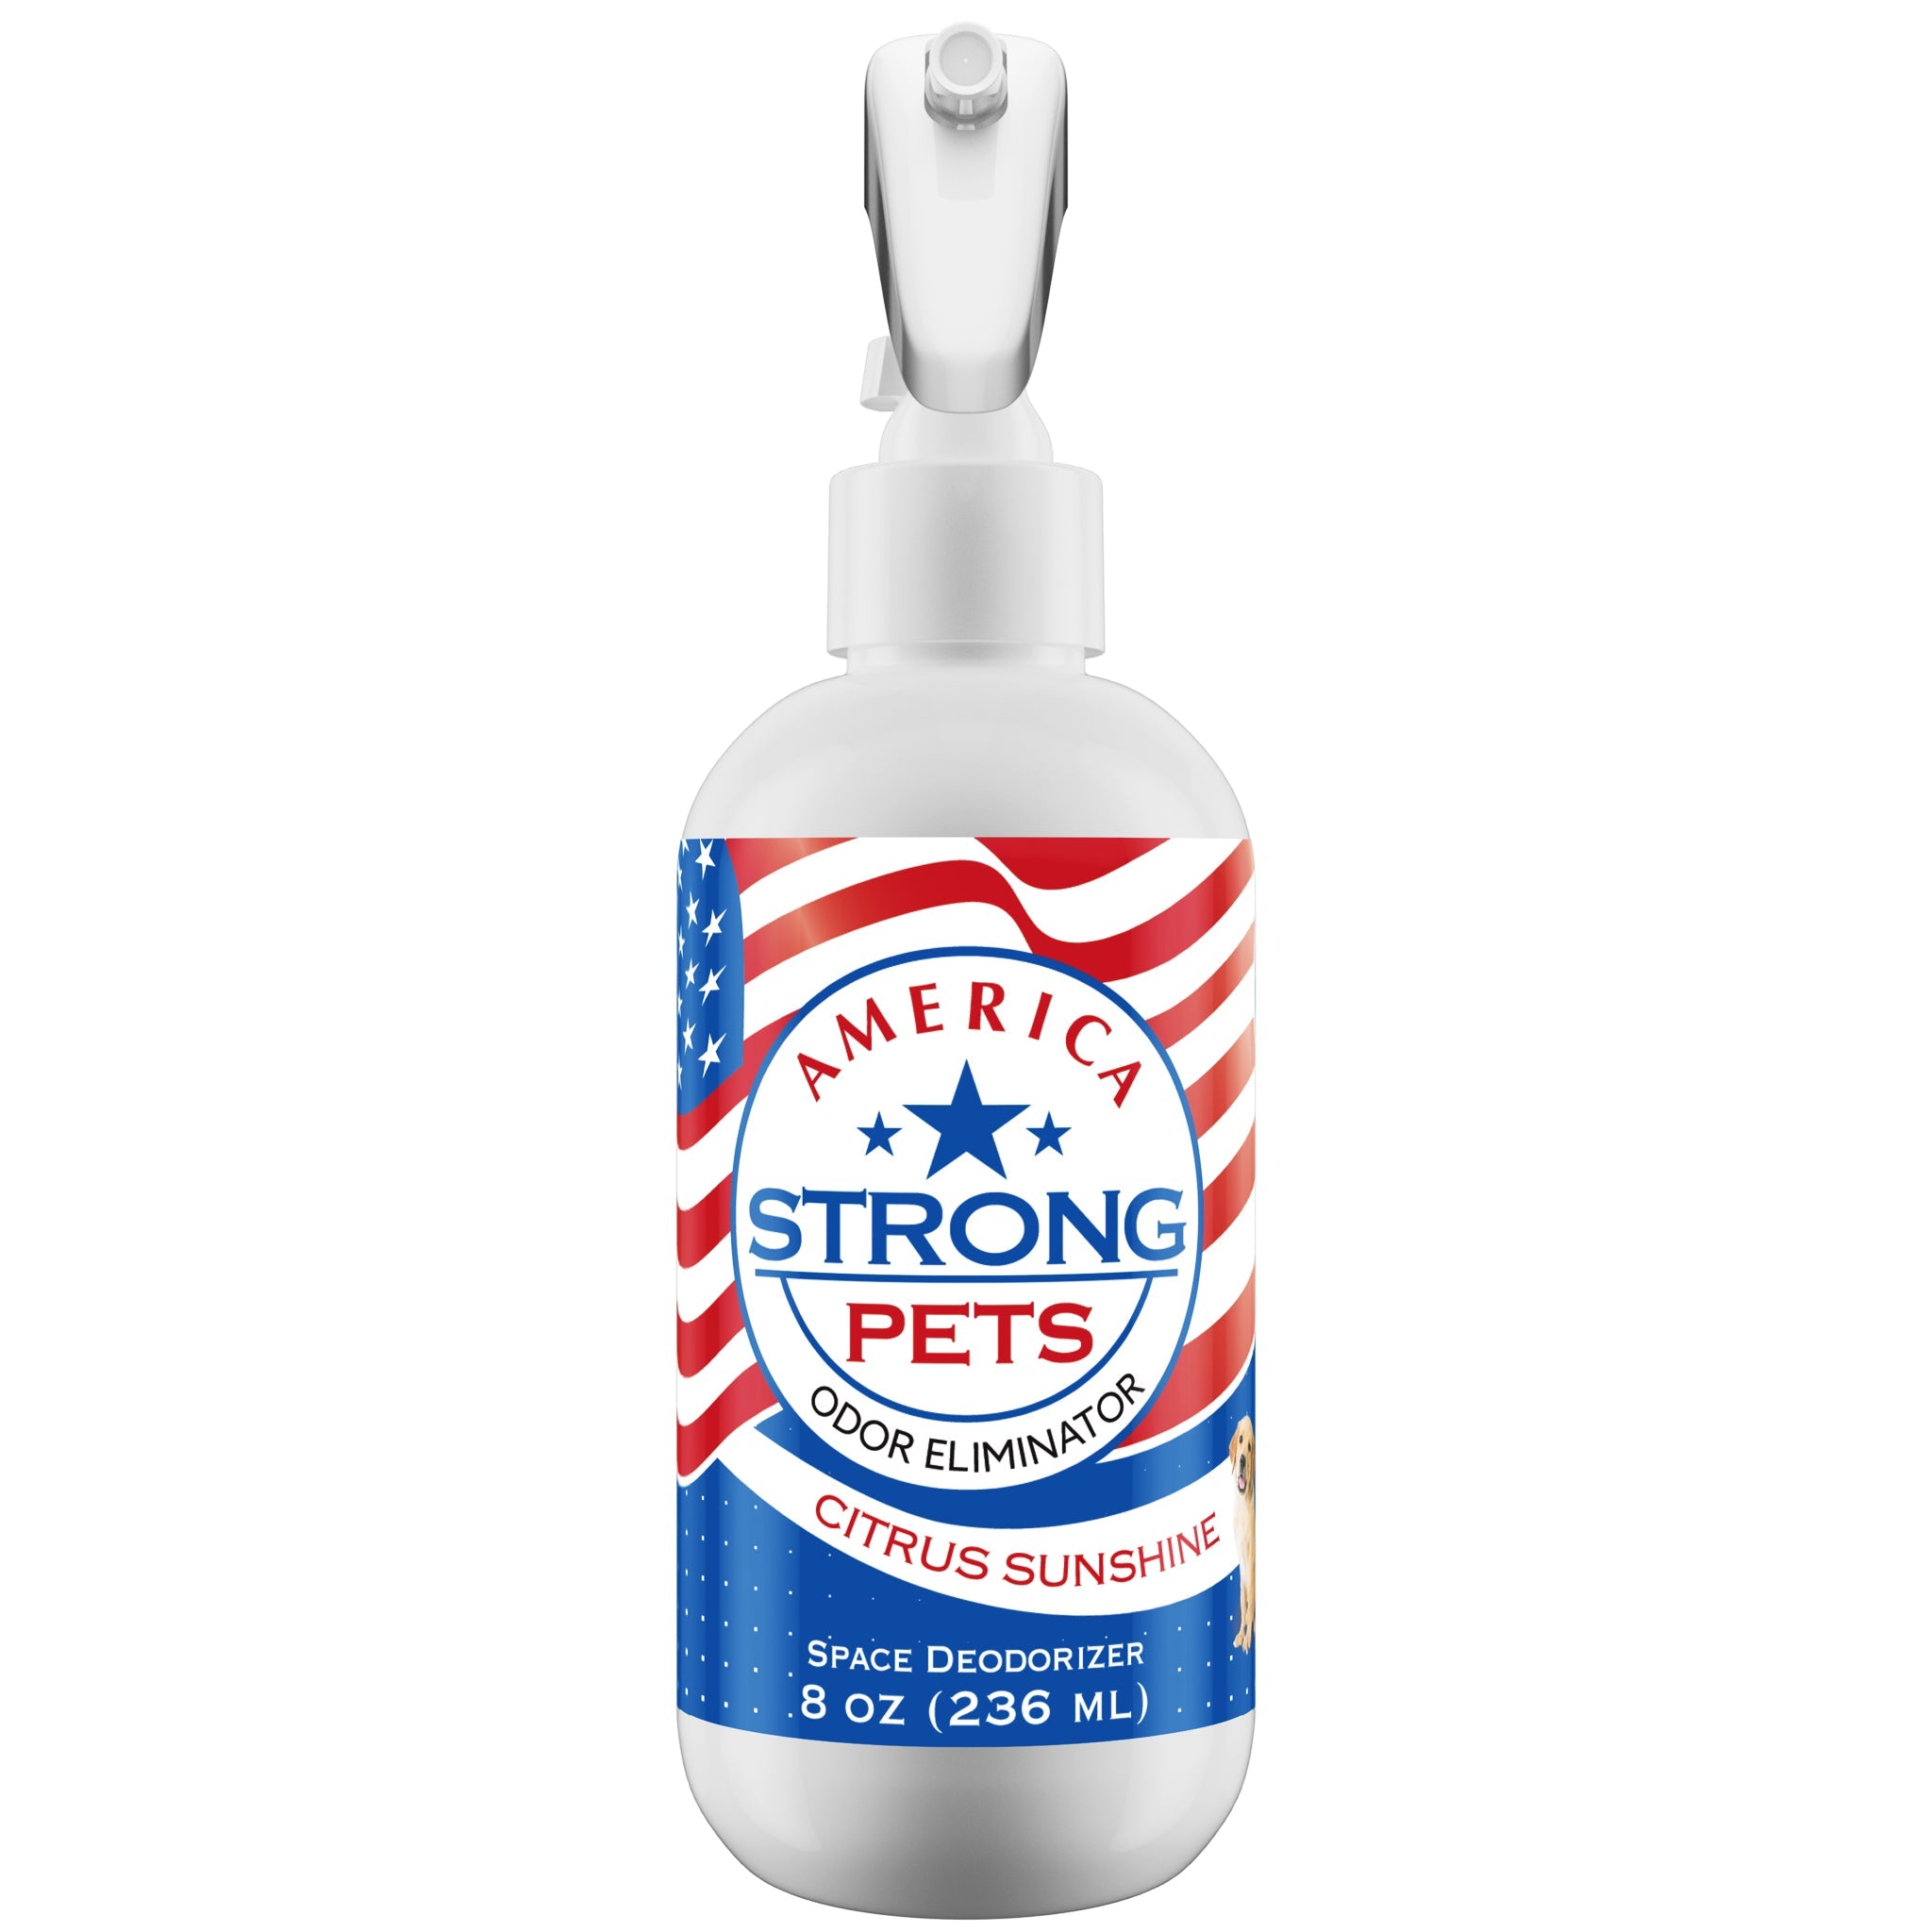 America Strong Pet Odor Eliminator - Citrus Sunshine Scent Size: 8 fl oz